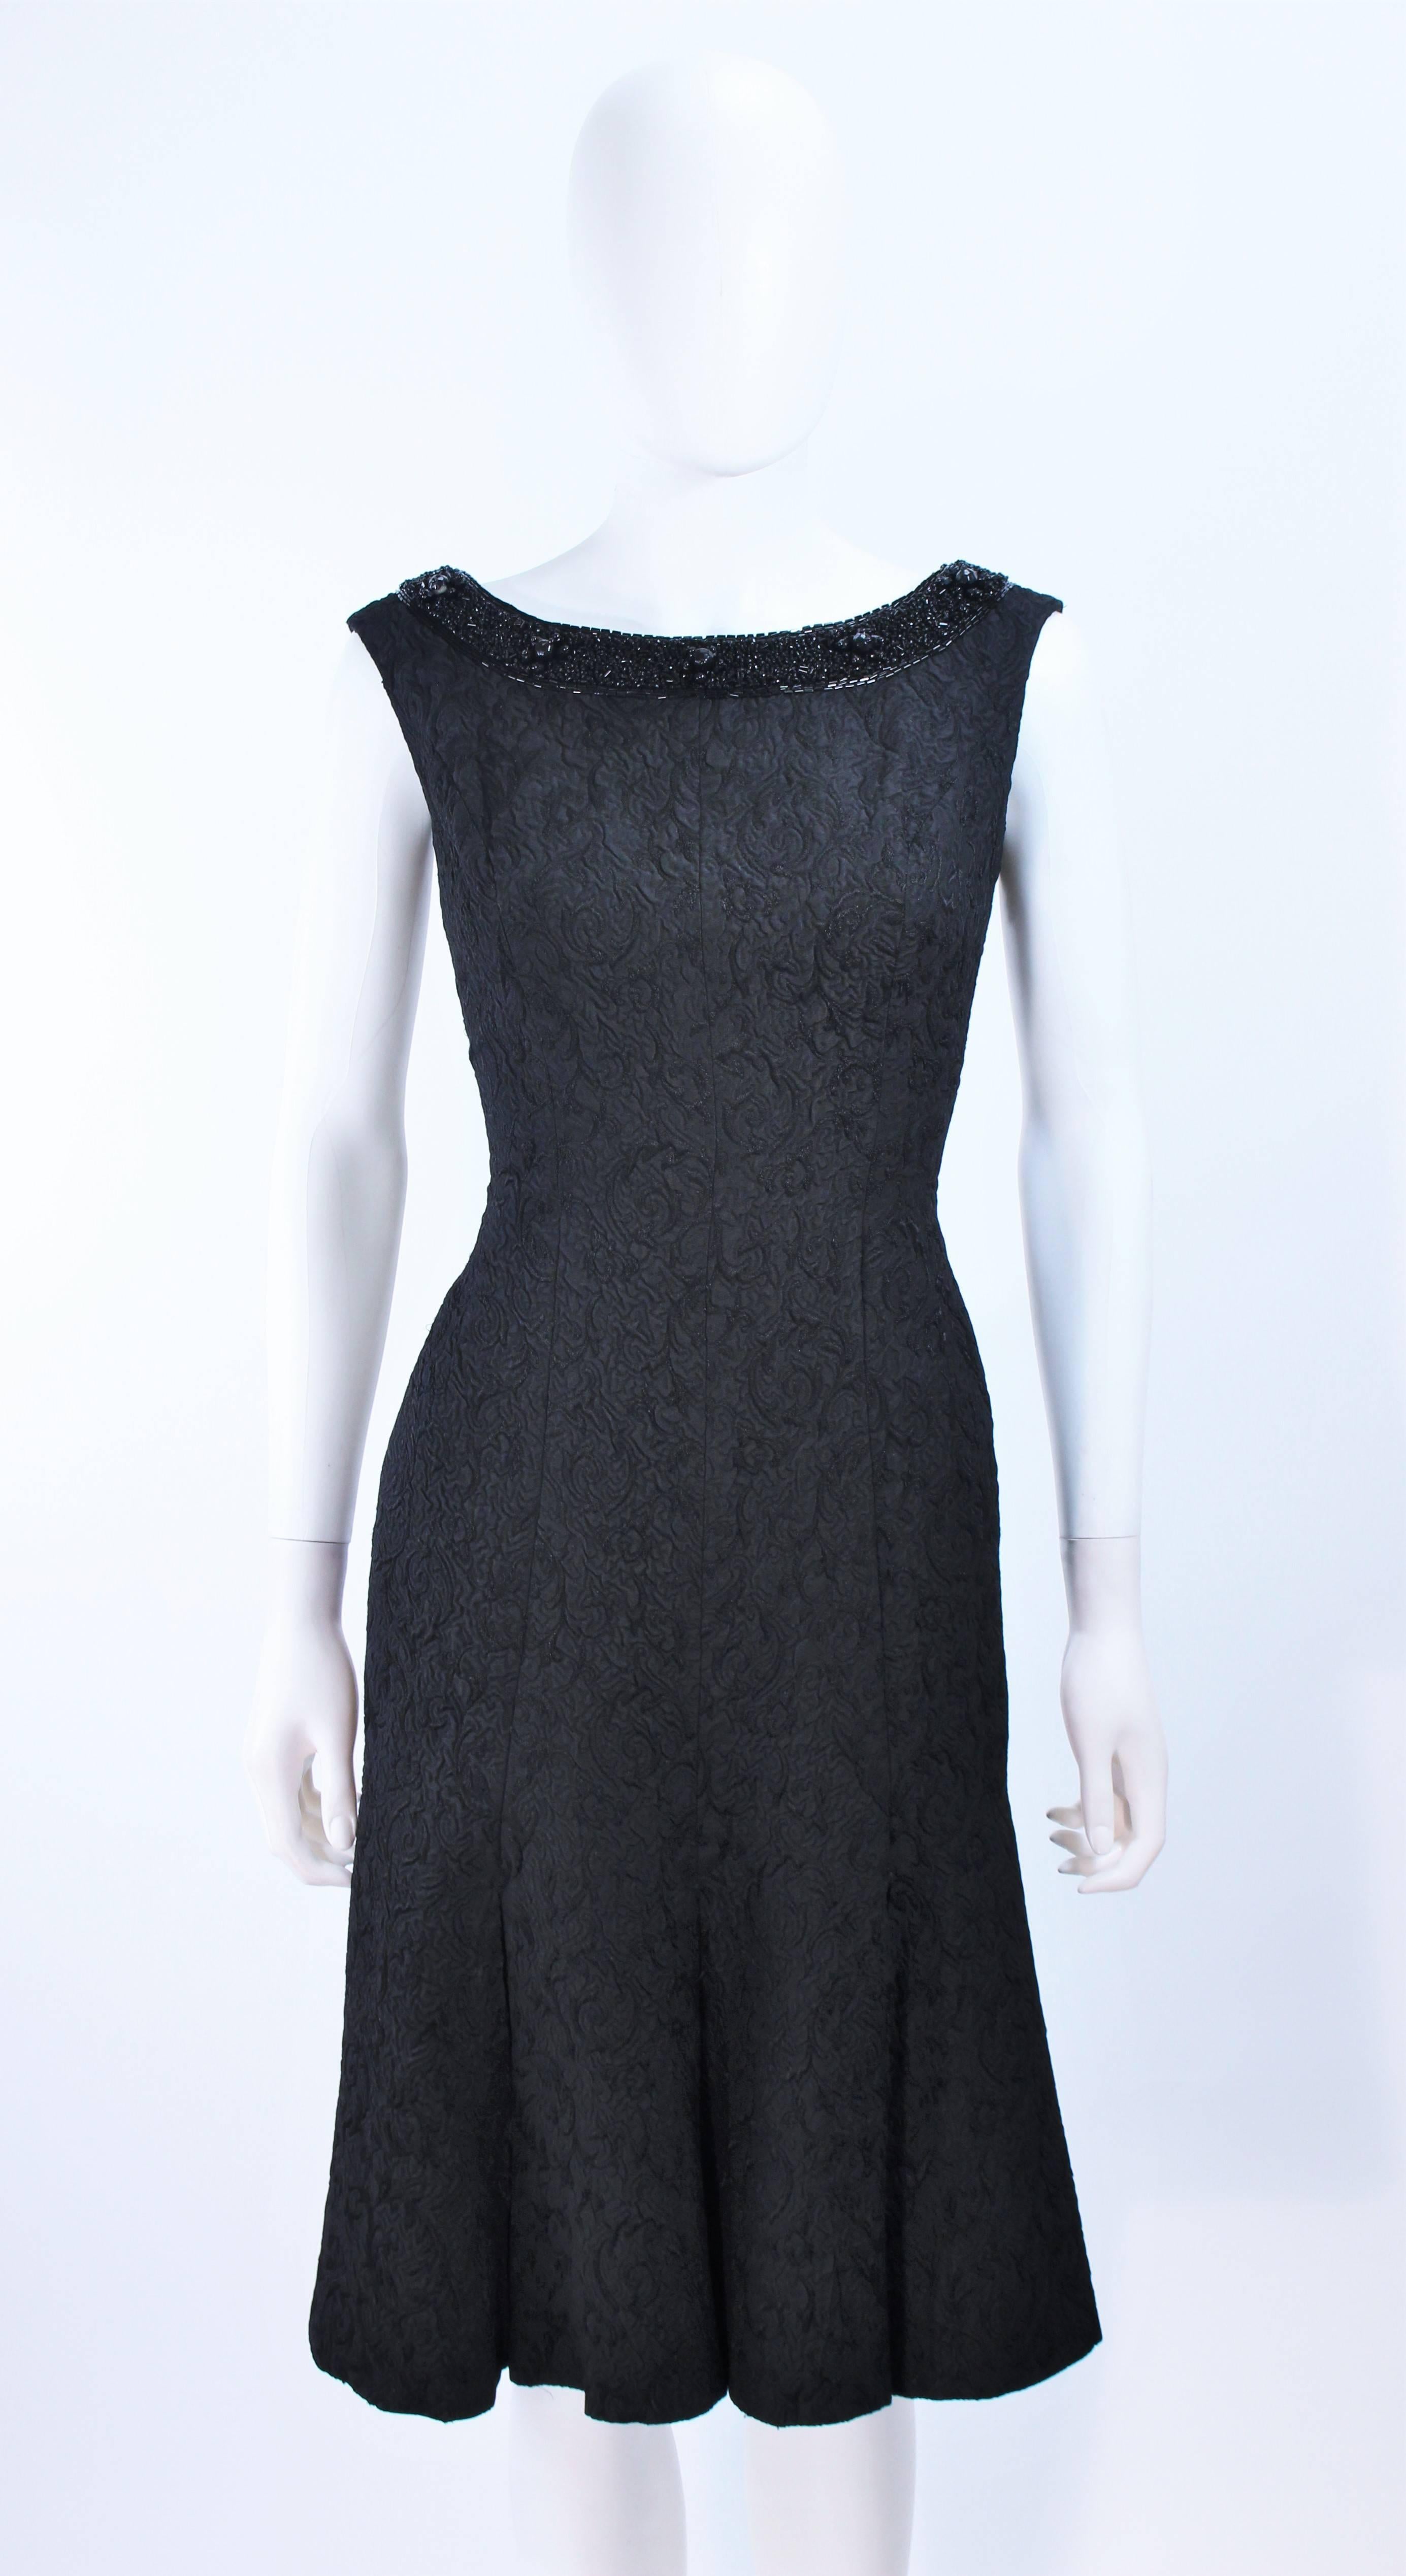 black dress with beaded neckline